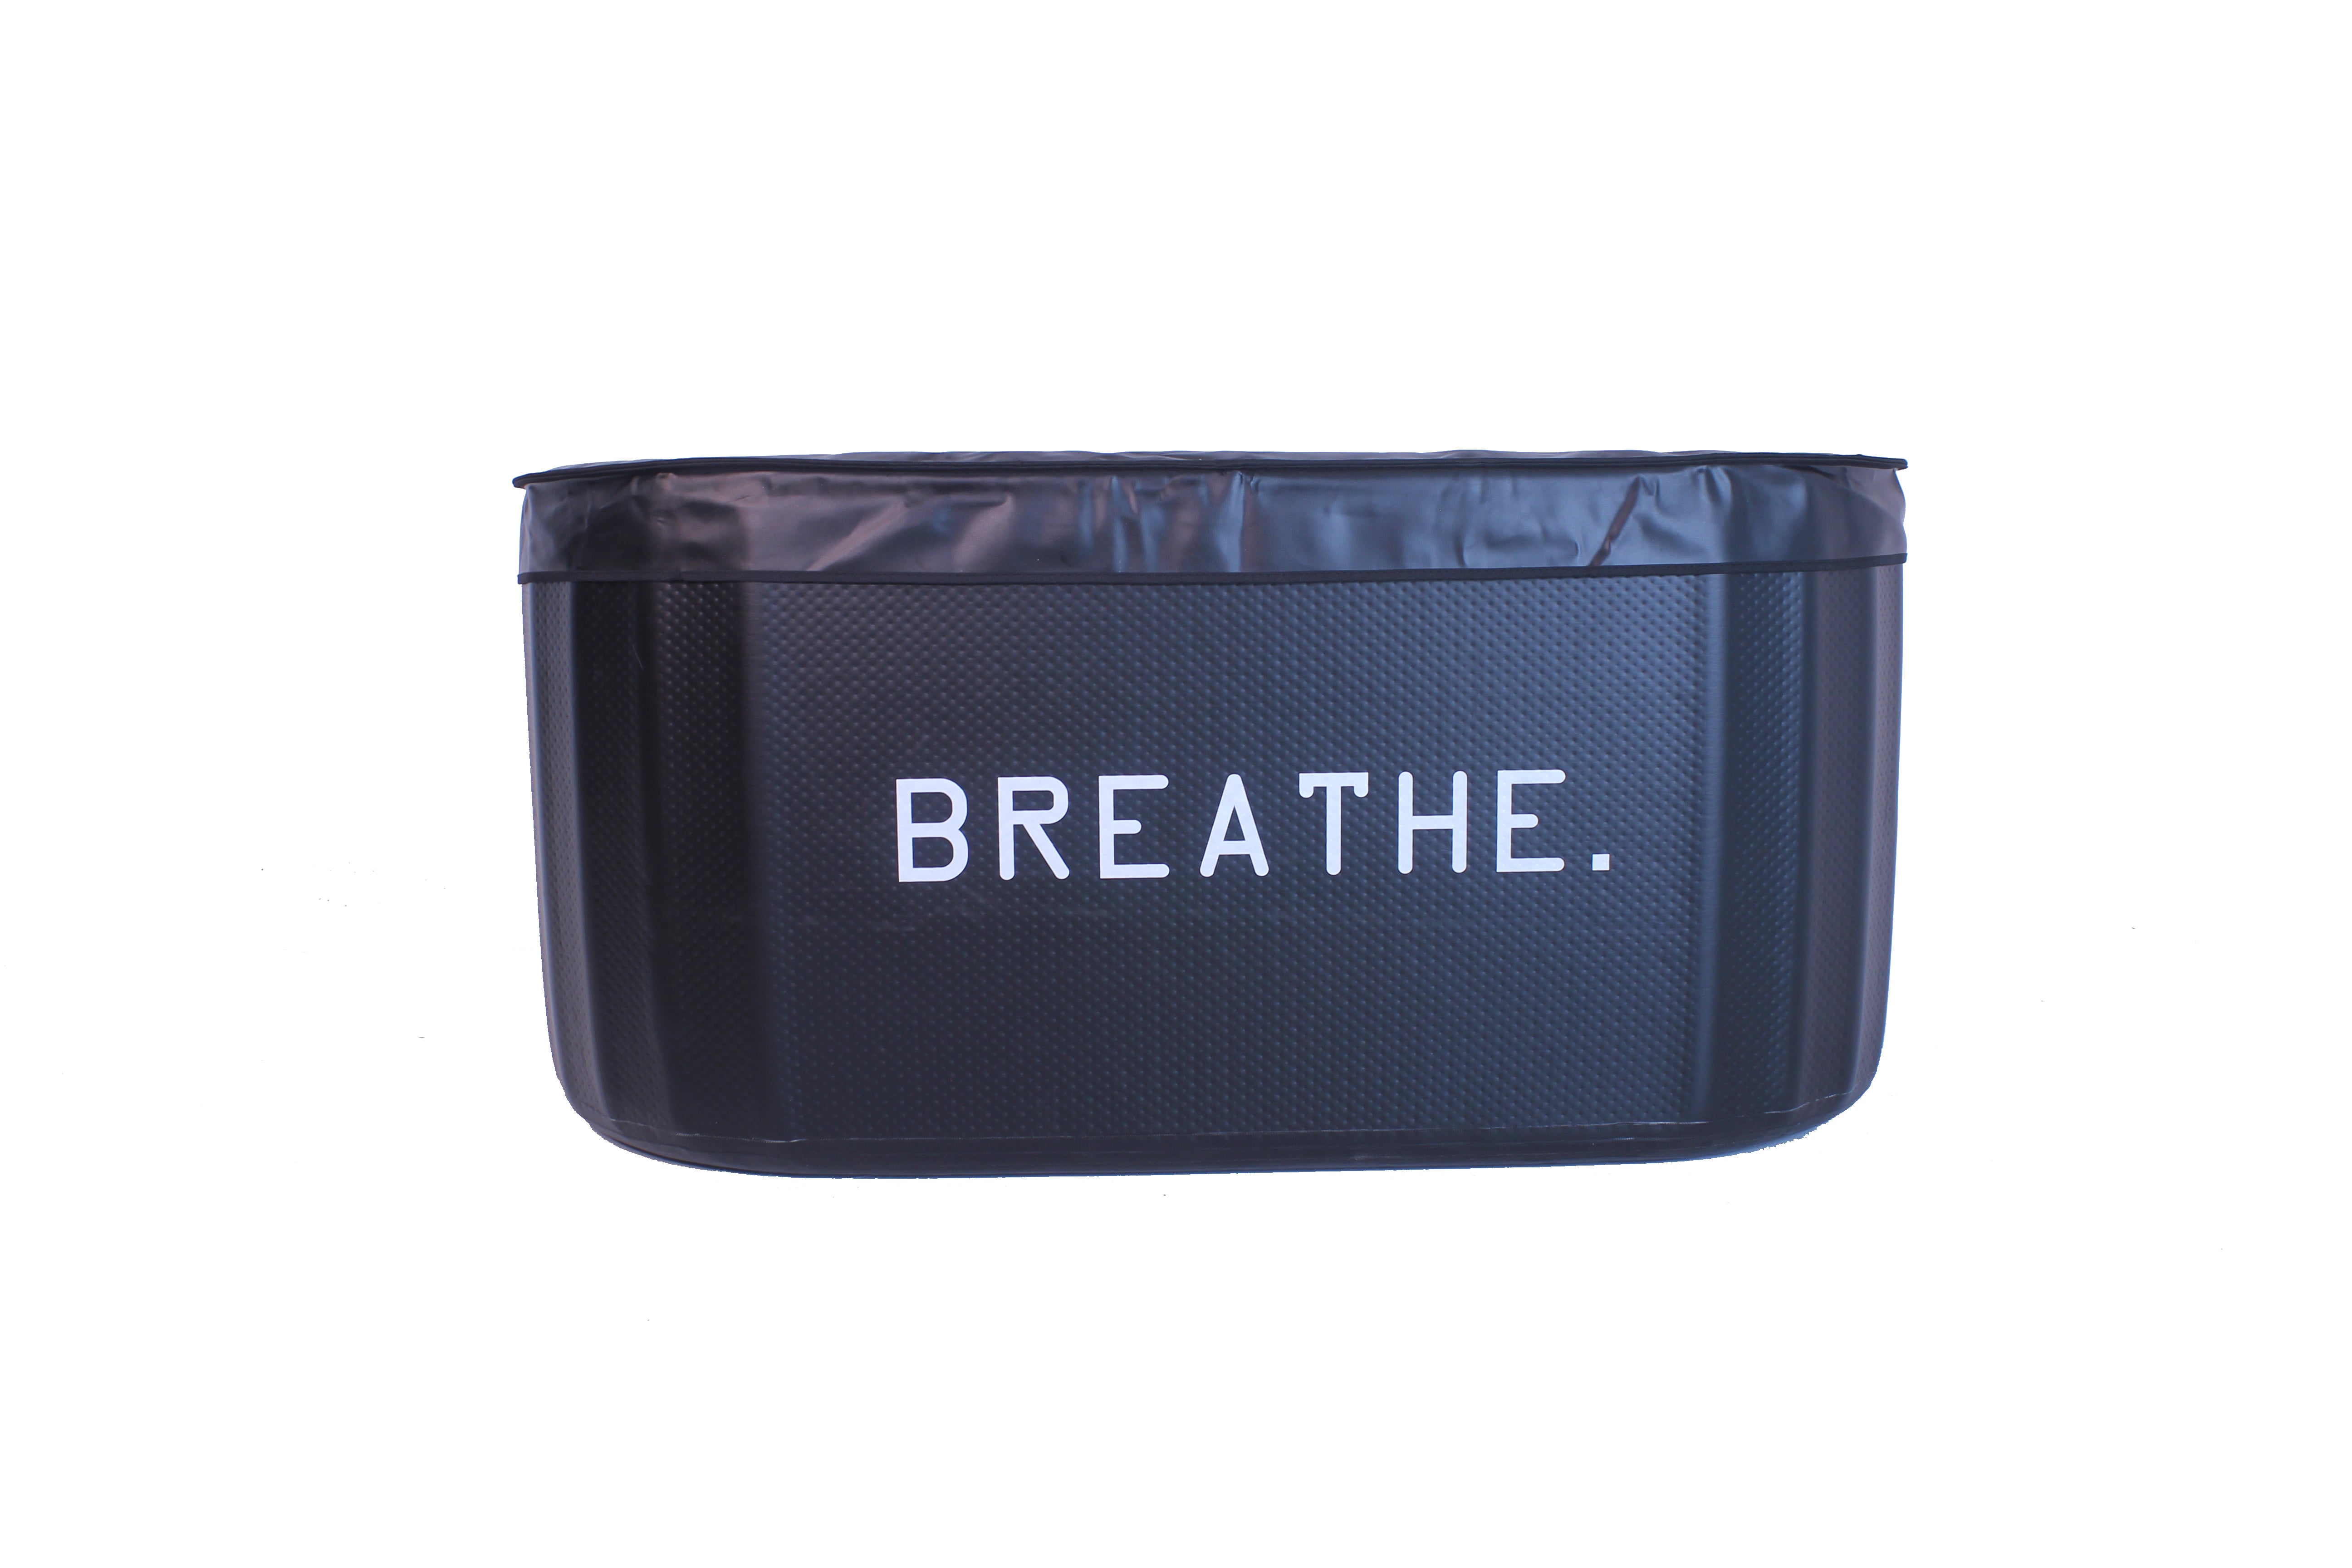 The Breathe Pod